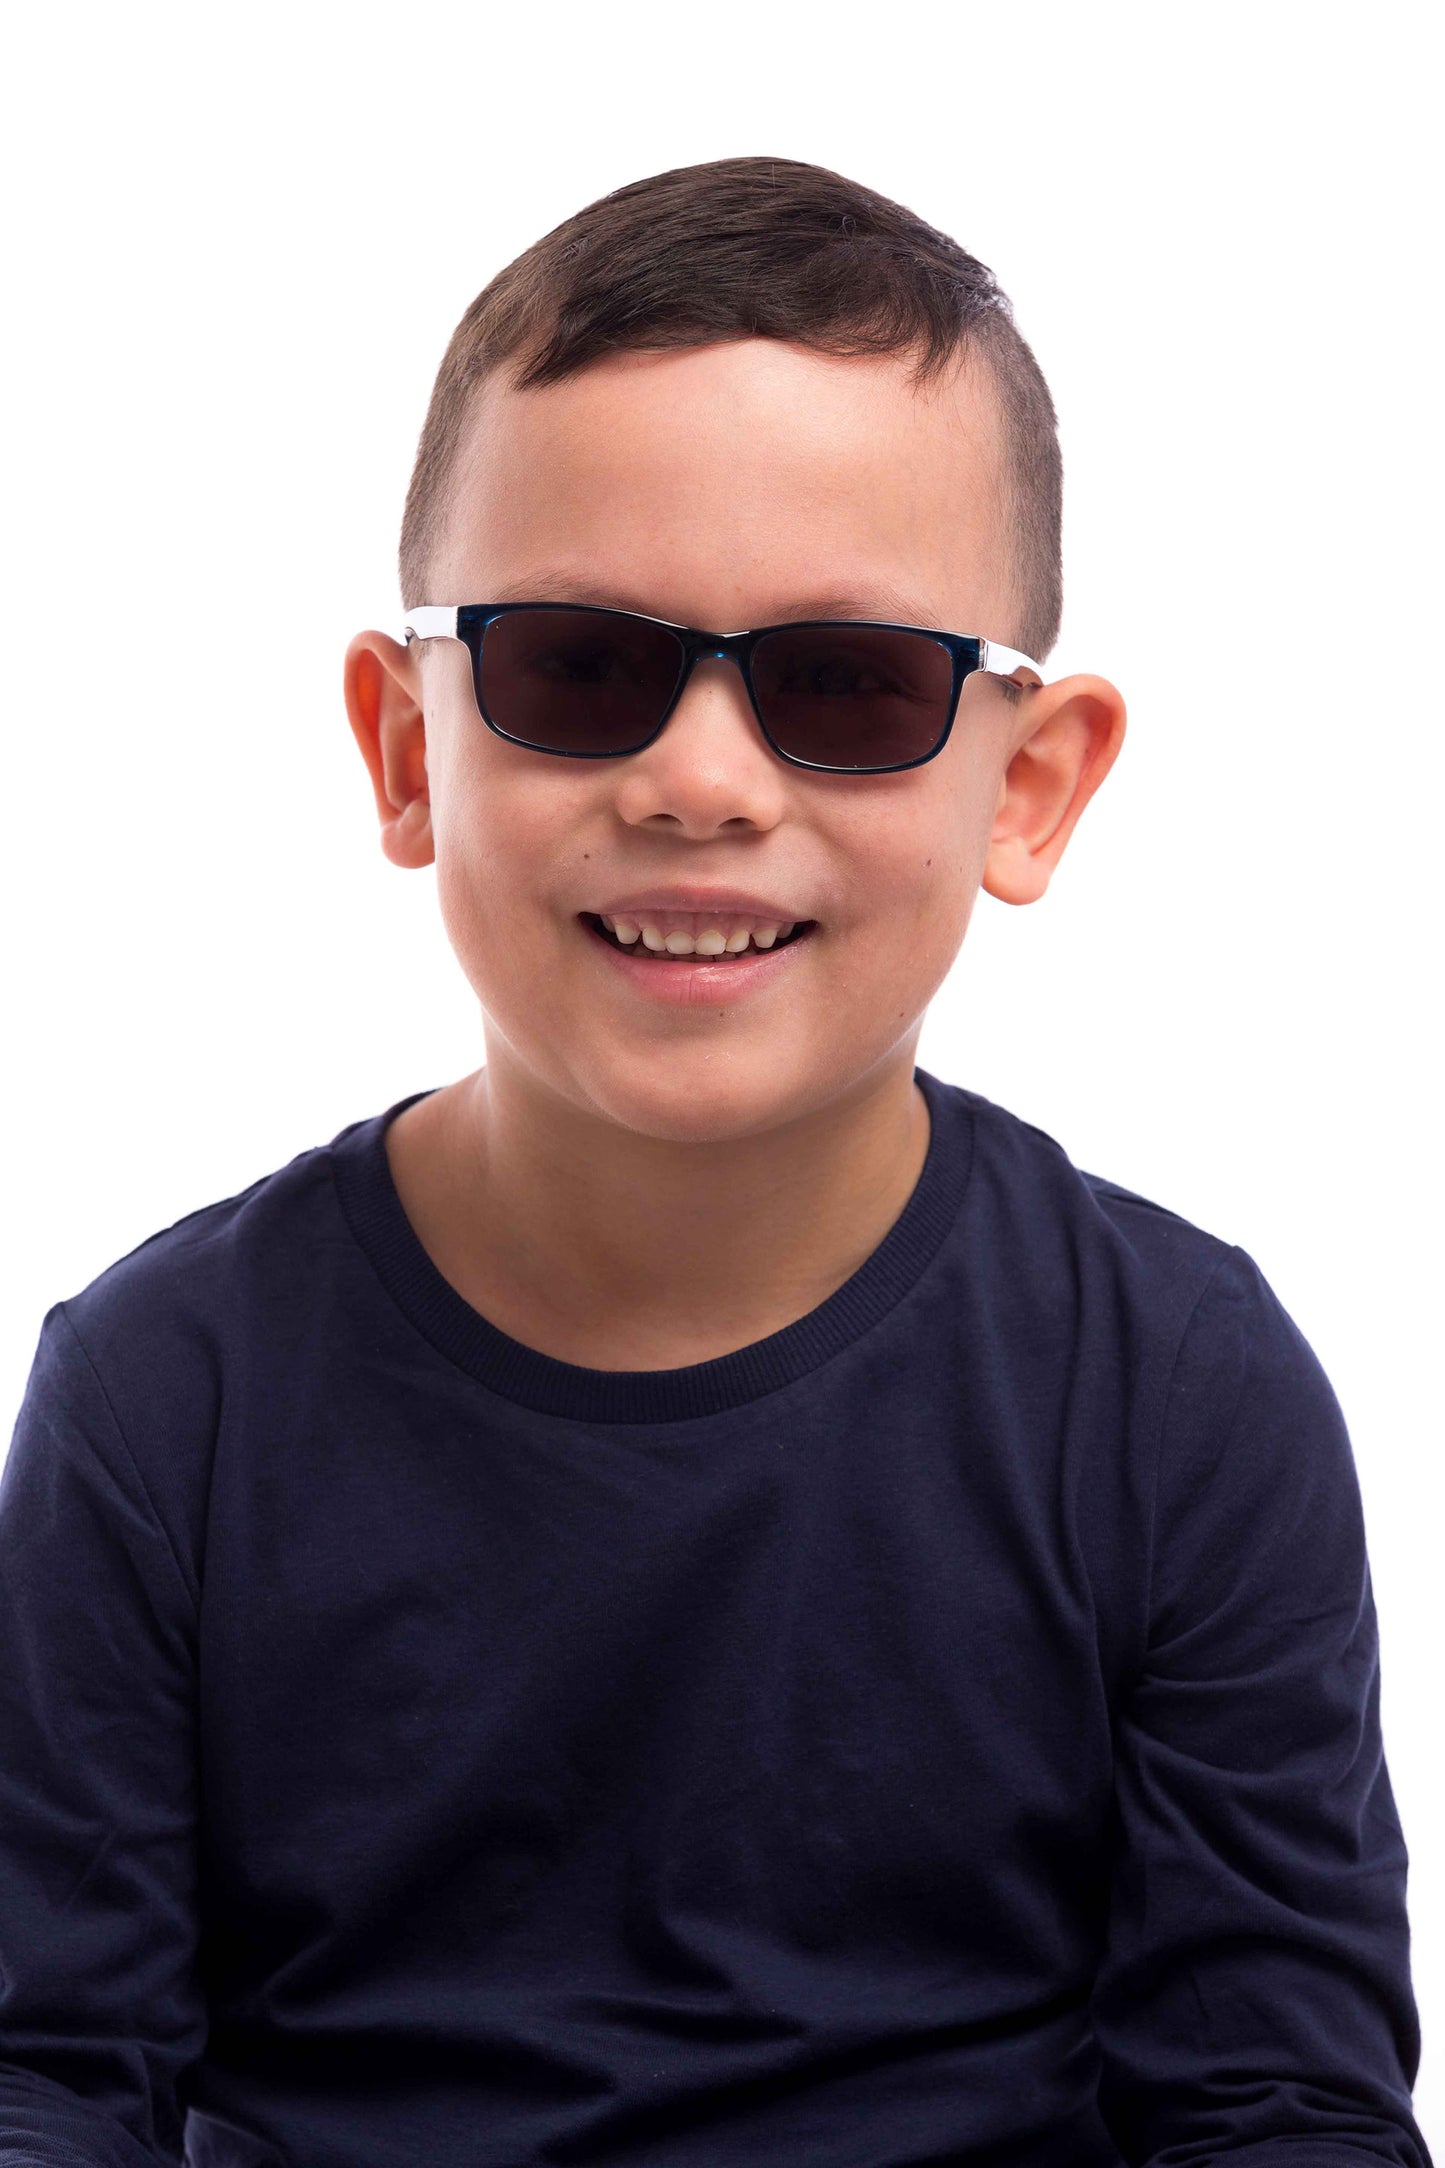 Theo Kids Sunglasses Readers (Grey)